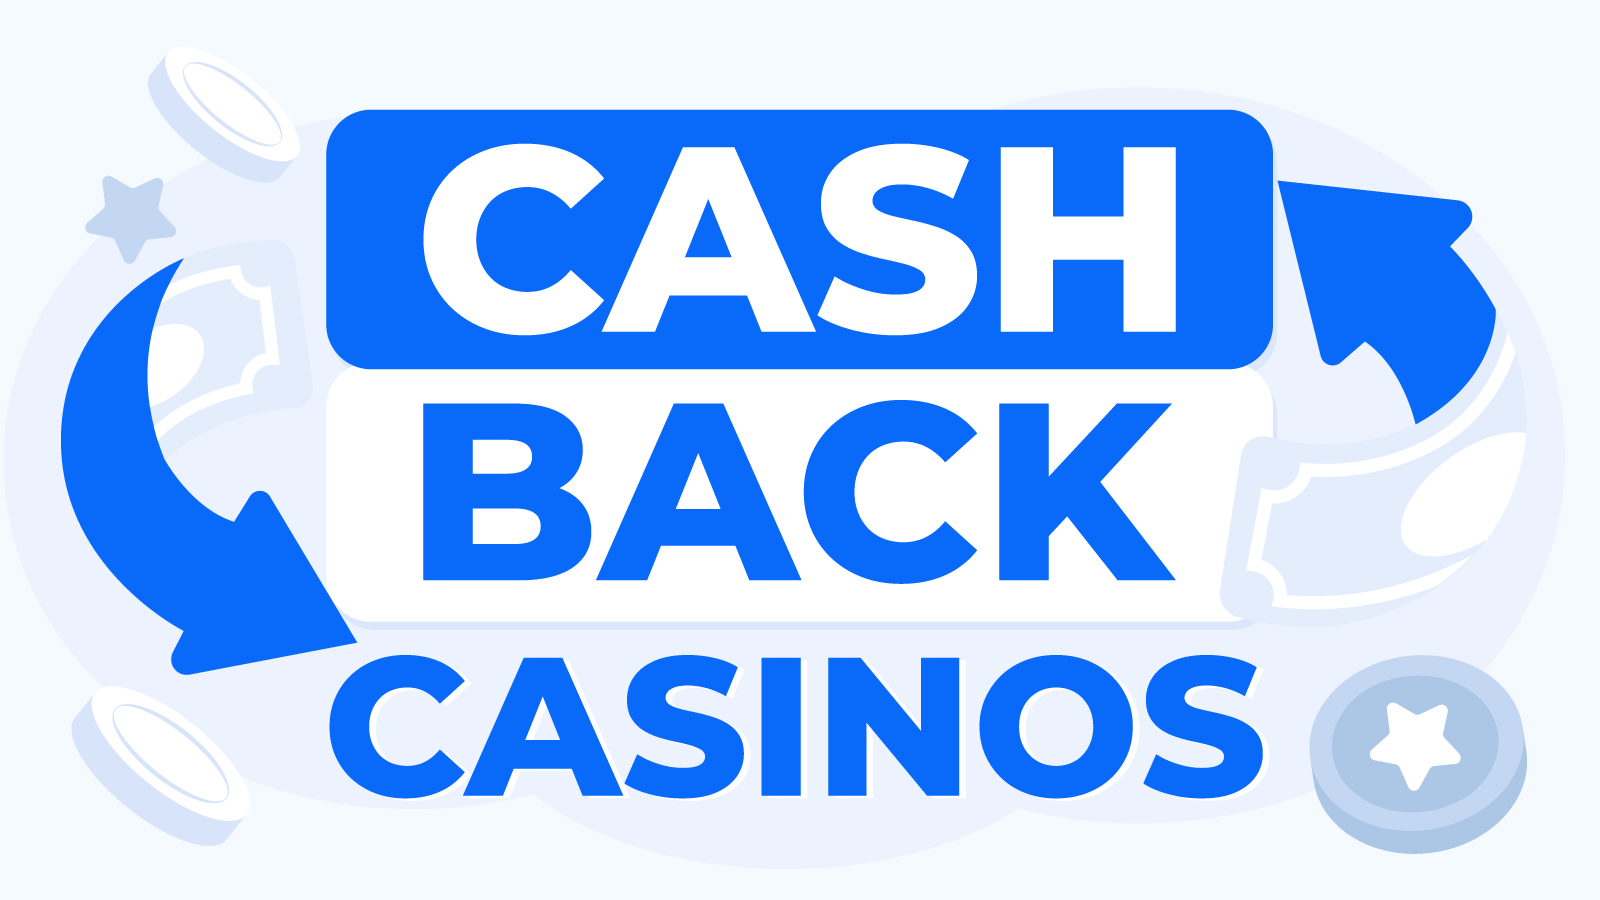 Best Cashback Bonus Casinos